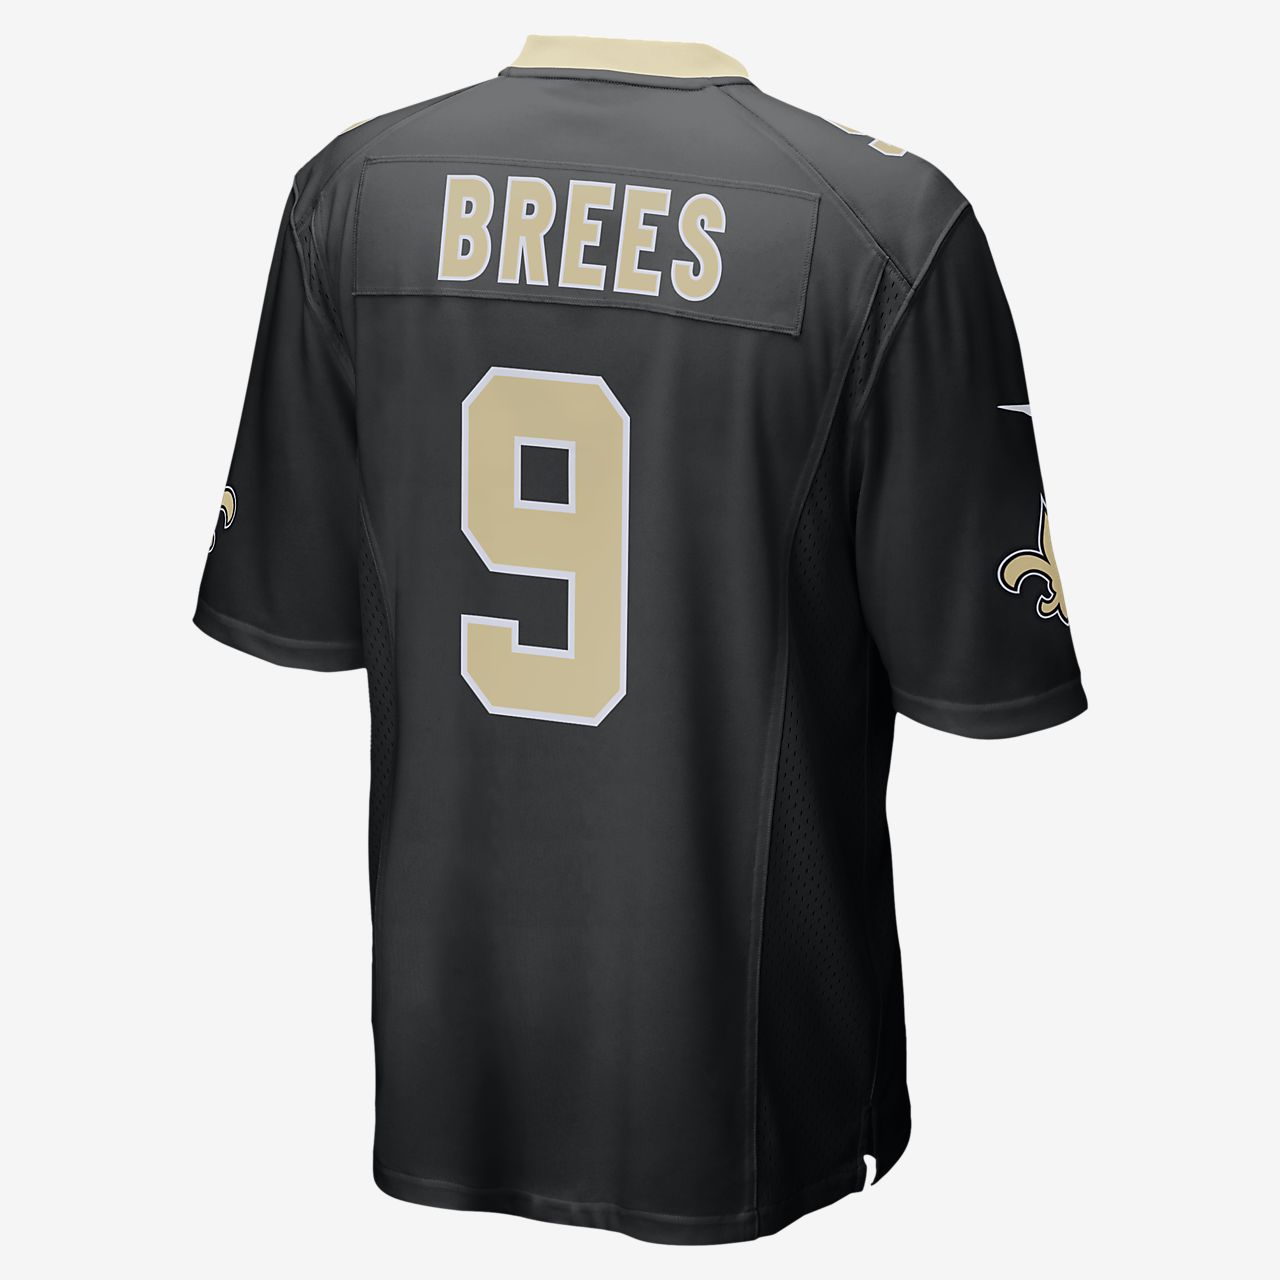 drew brees stitched jersey